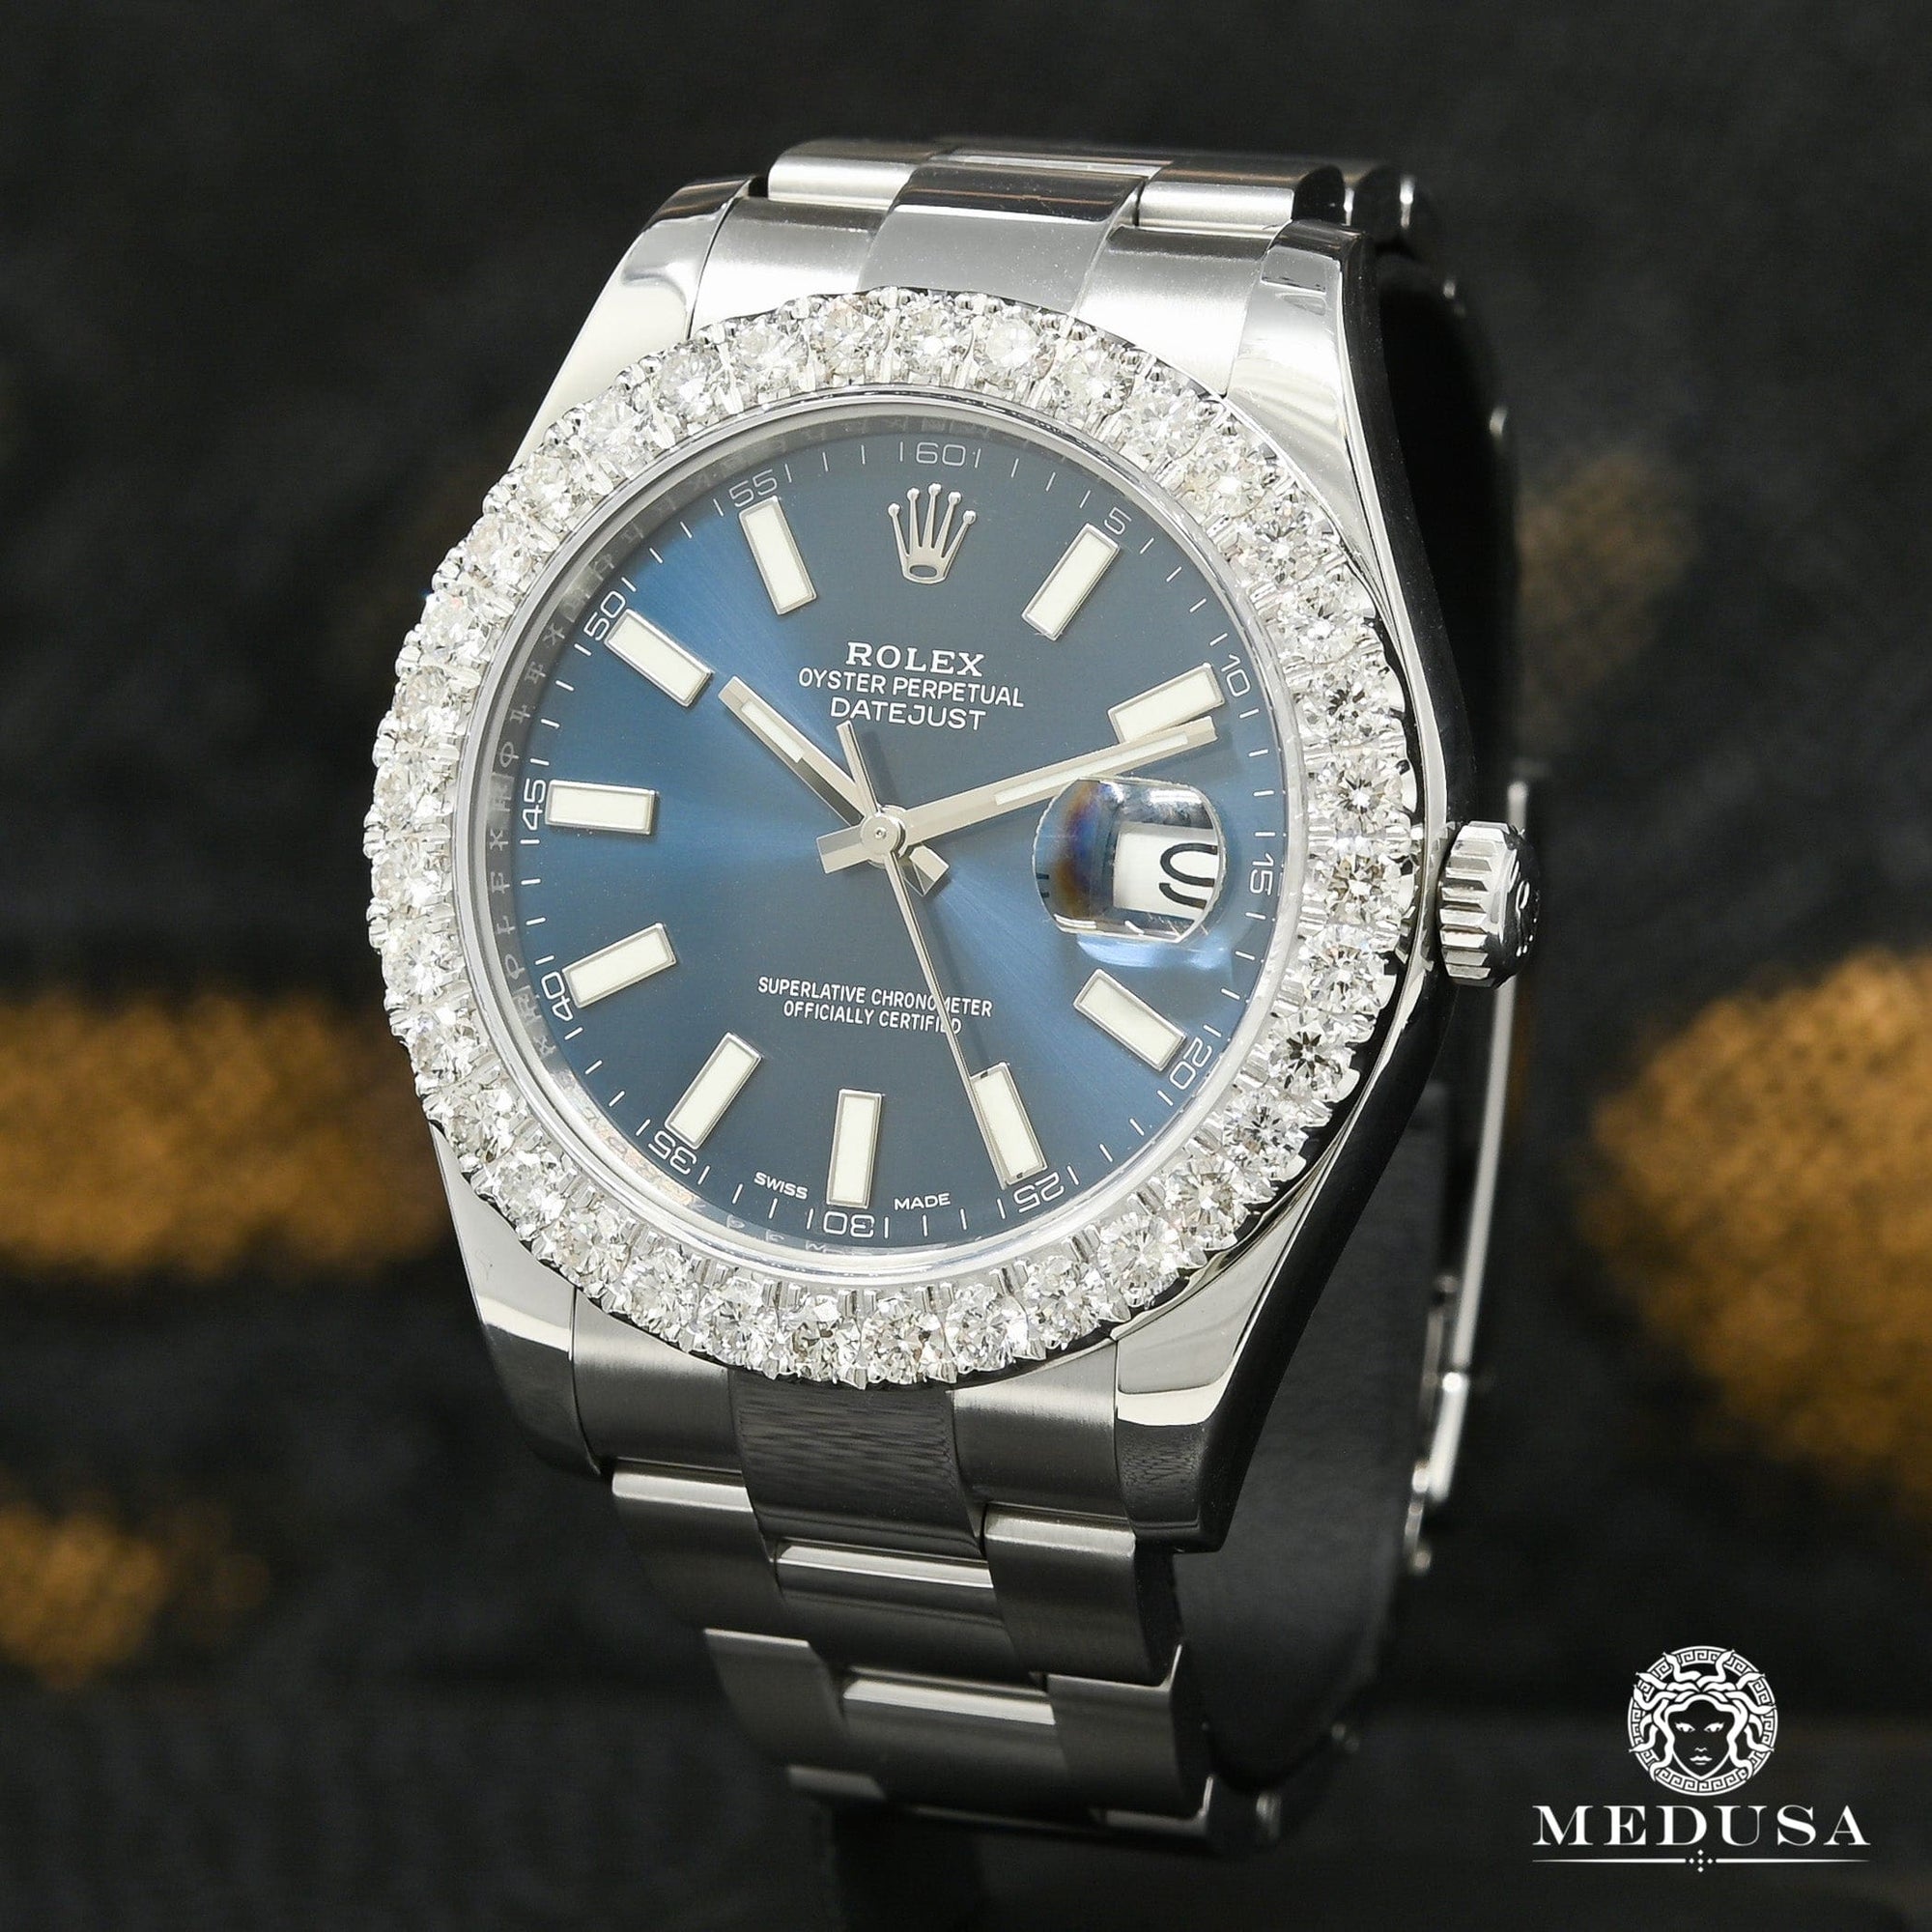 Rolex watch | Rolex Datejust 41mm Men's Watch - Blue Stick Iced Stainless